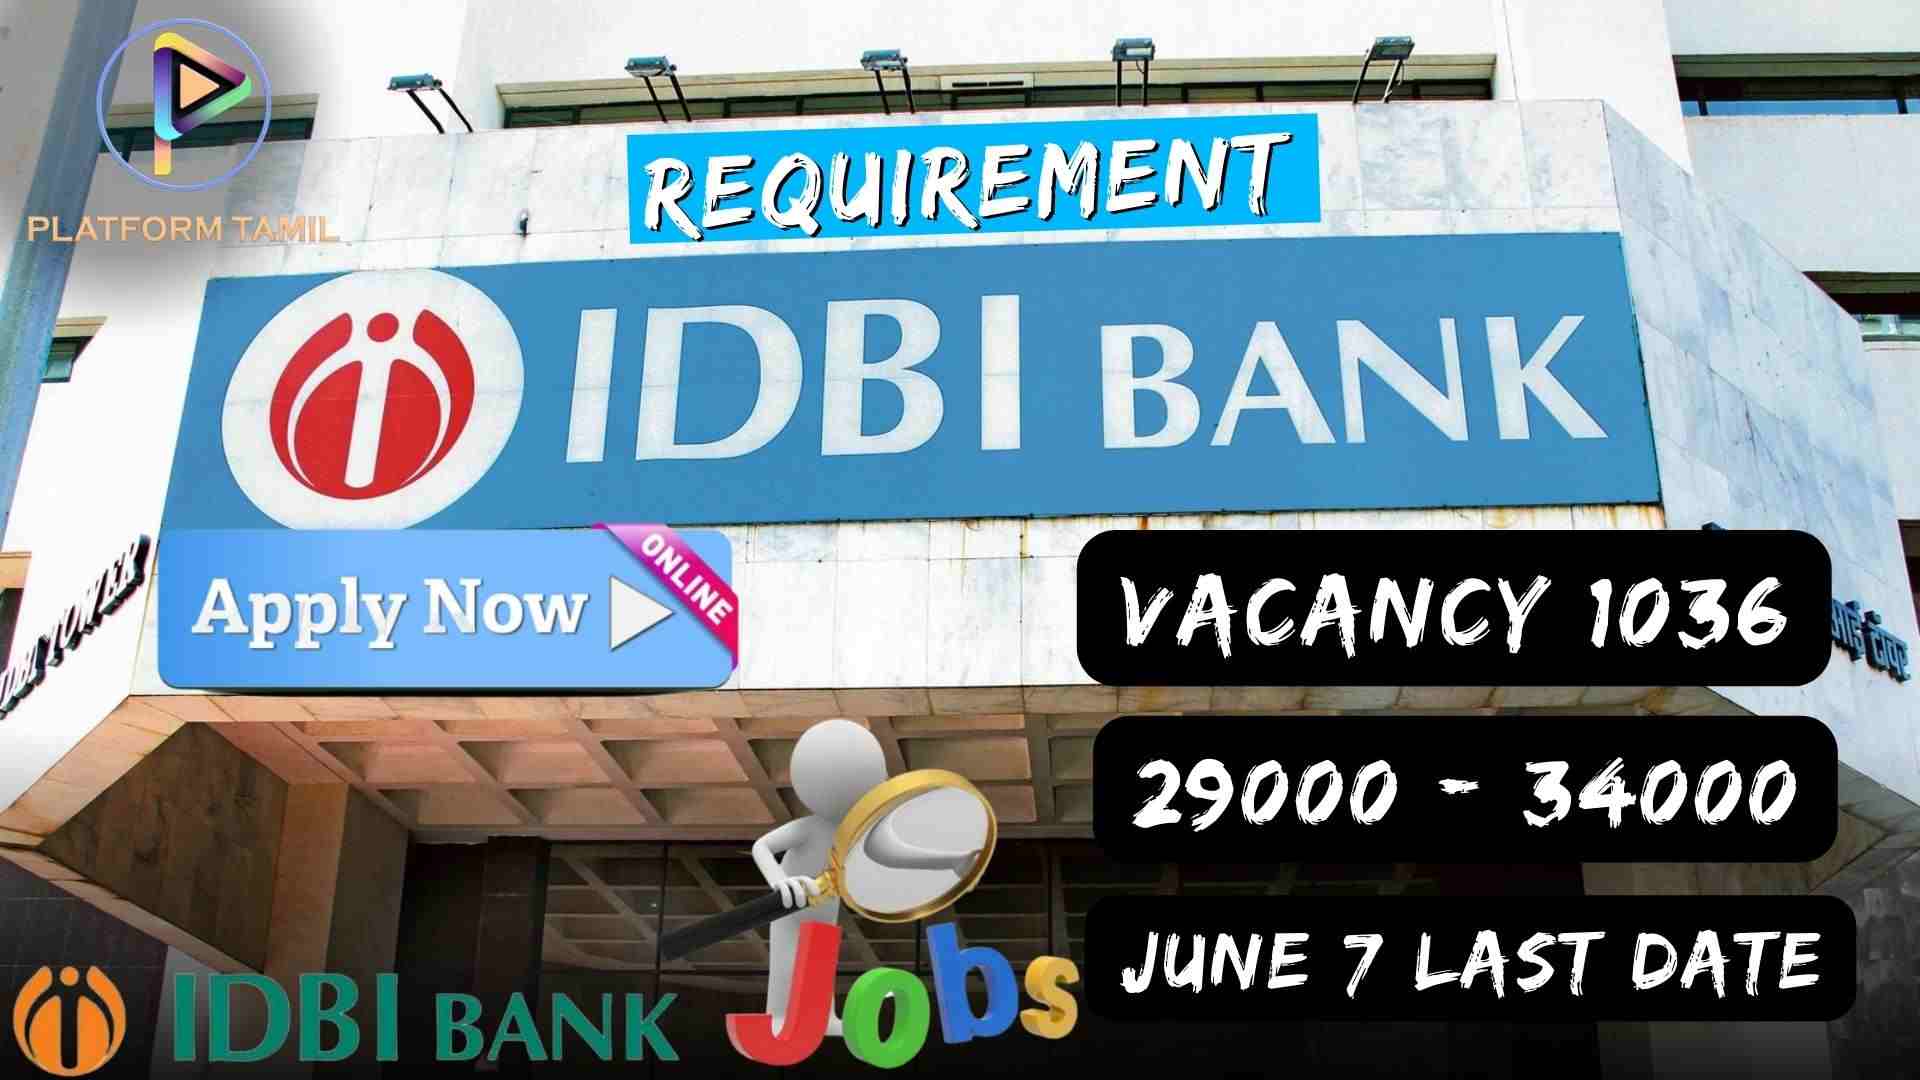 IDBI Bank Recruitment - Platform Tamil